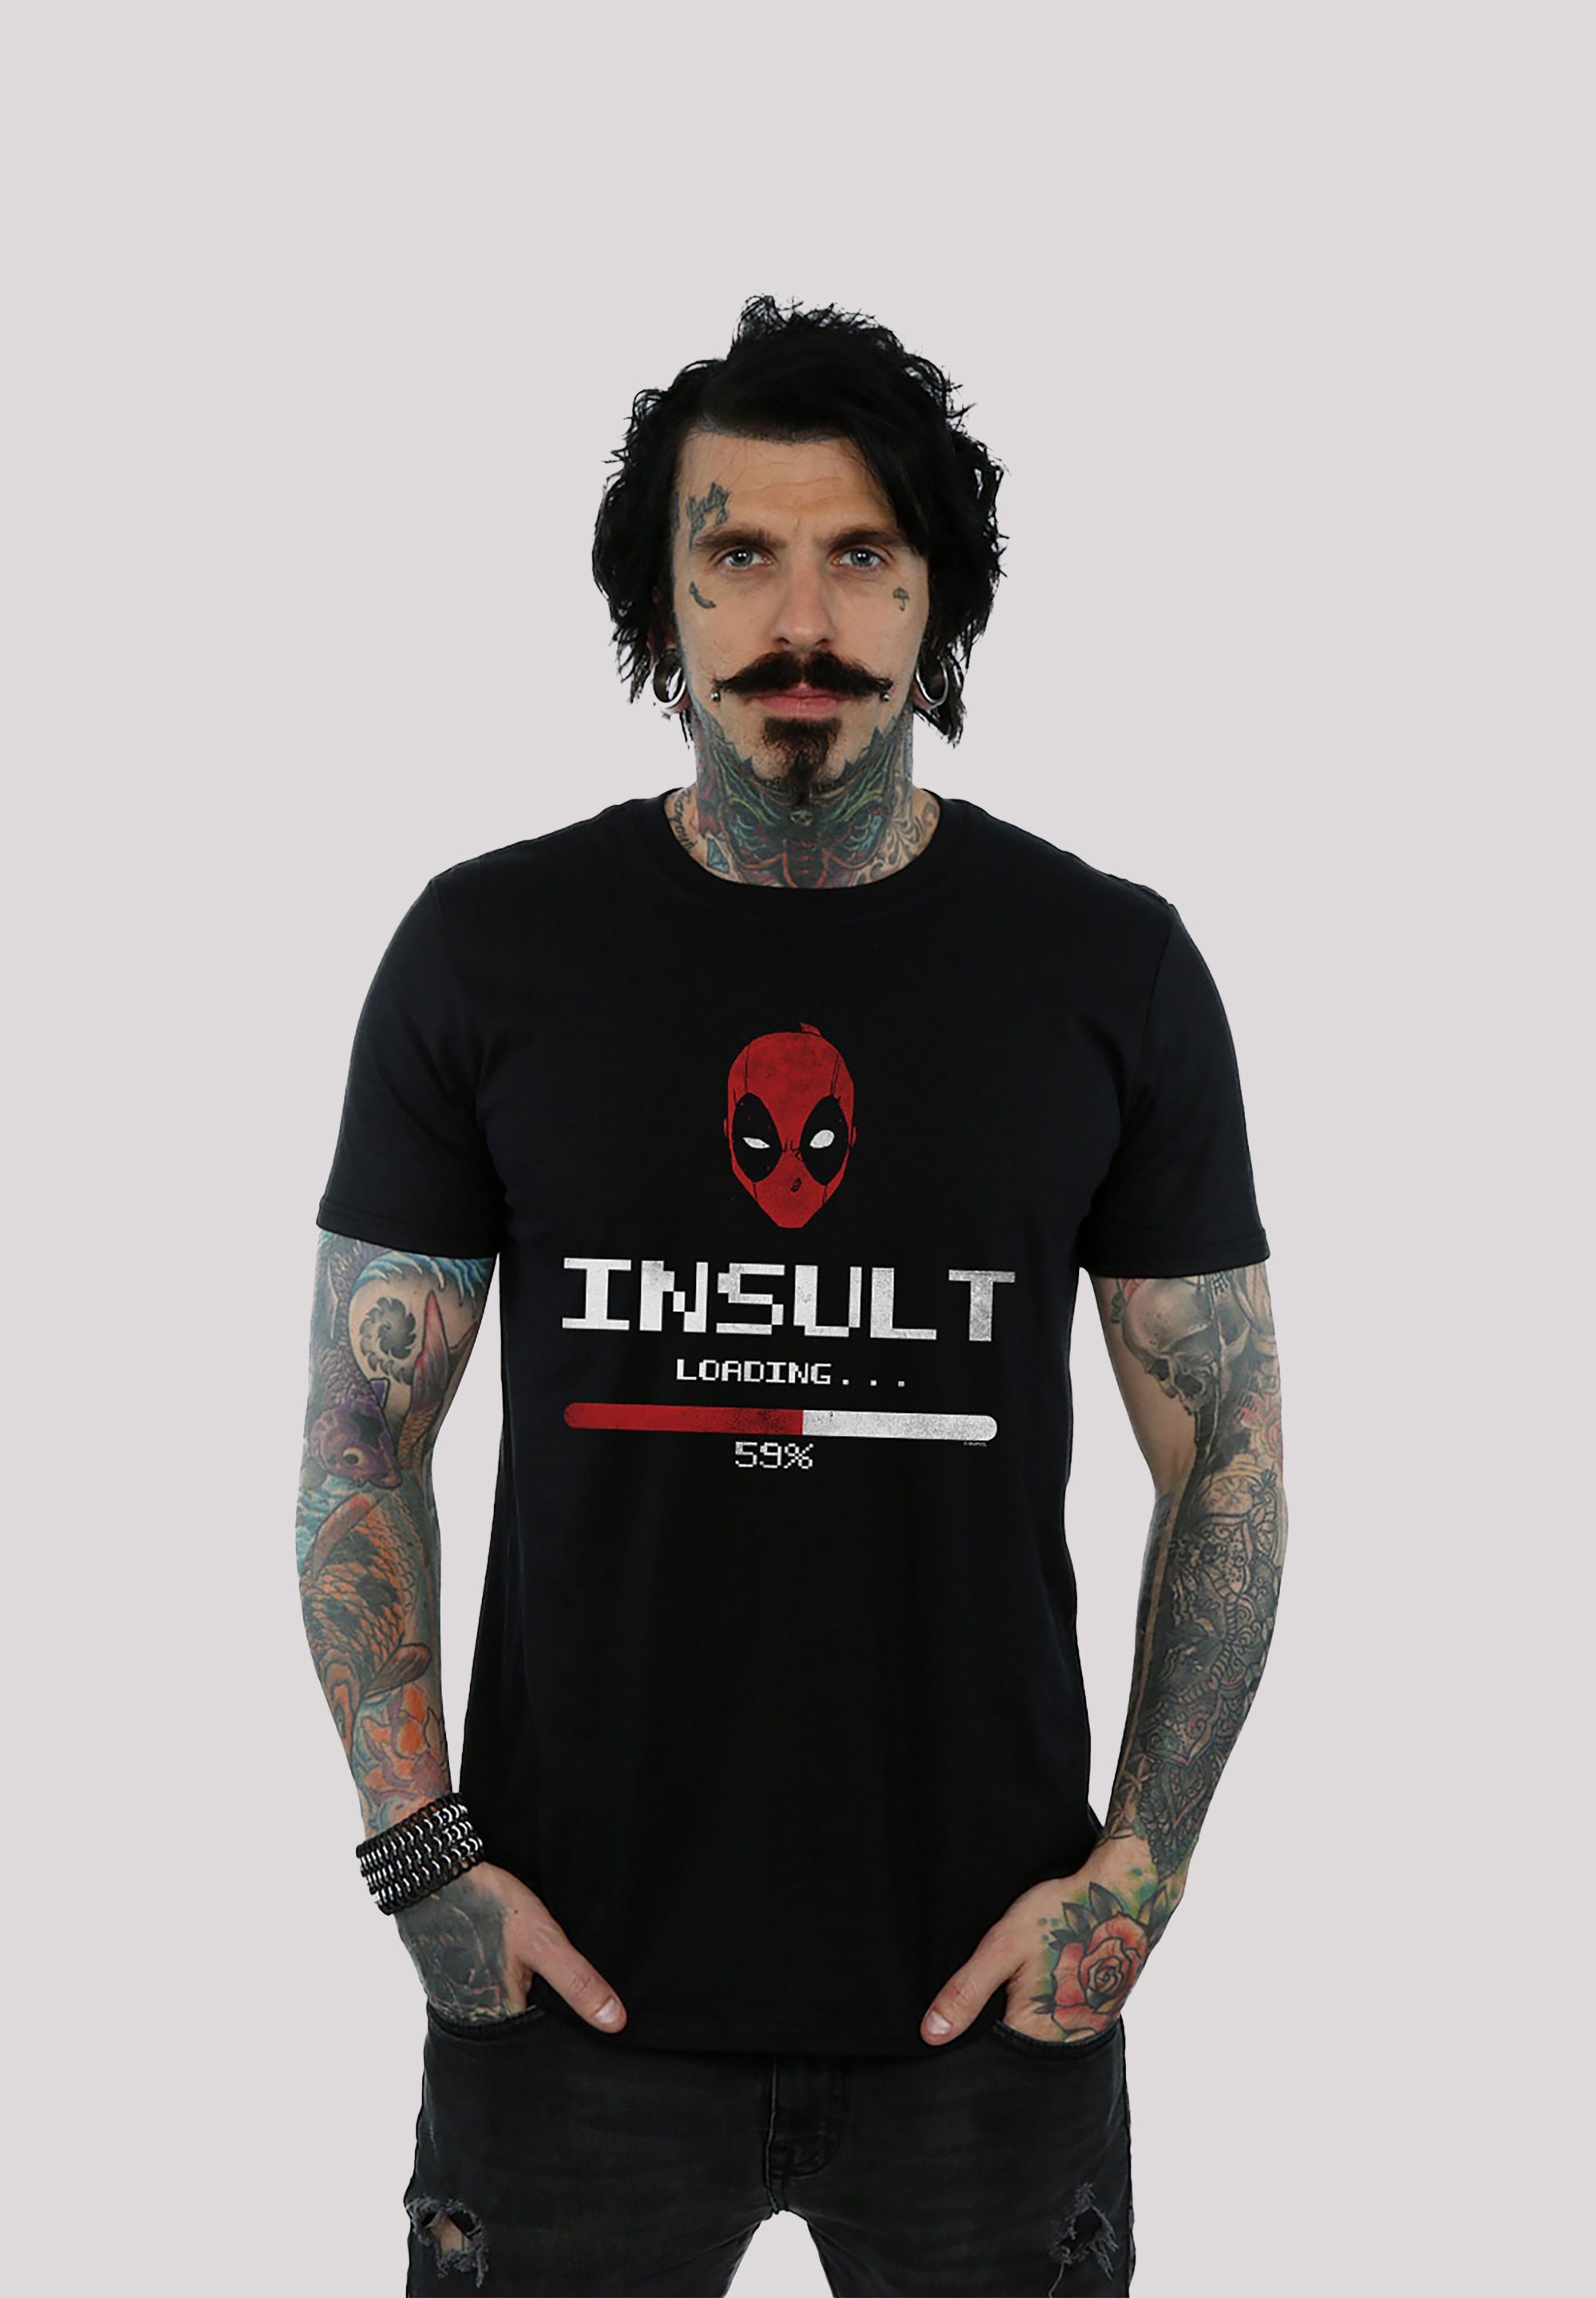 F4NT4STIC T-Shirt Marvel Deadpool Insult Loading Print